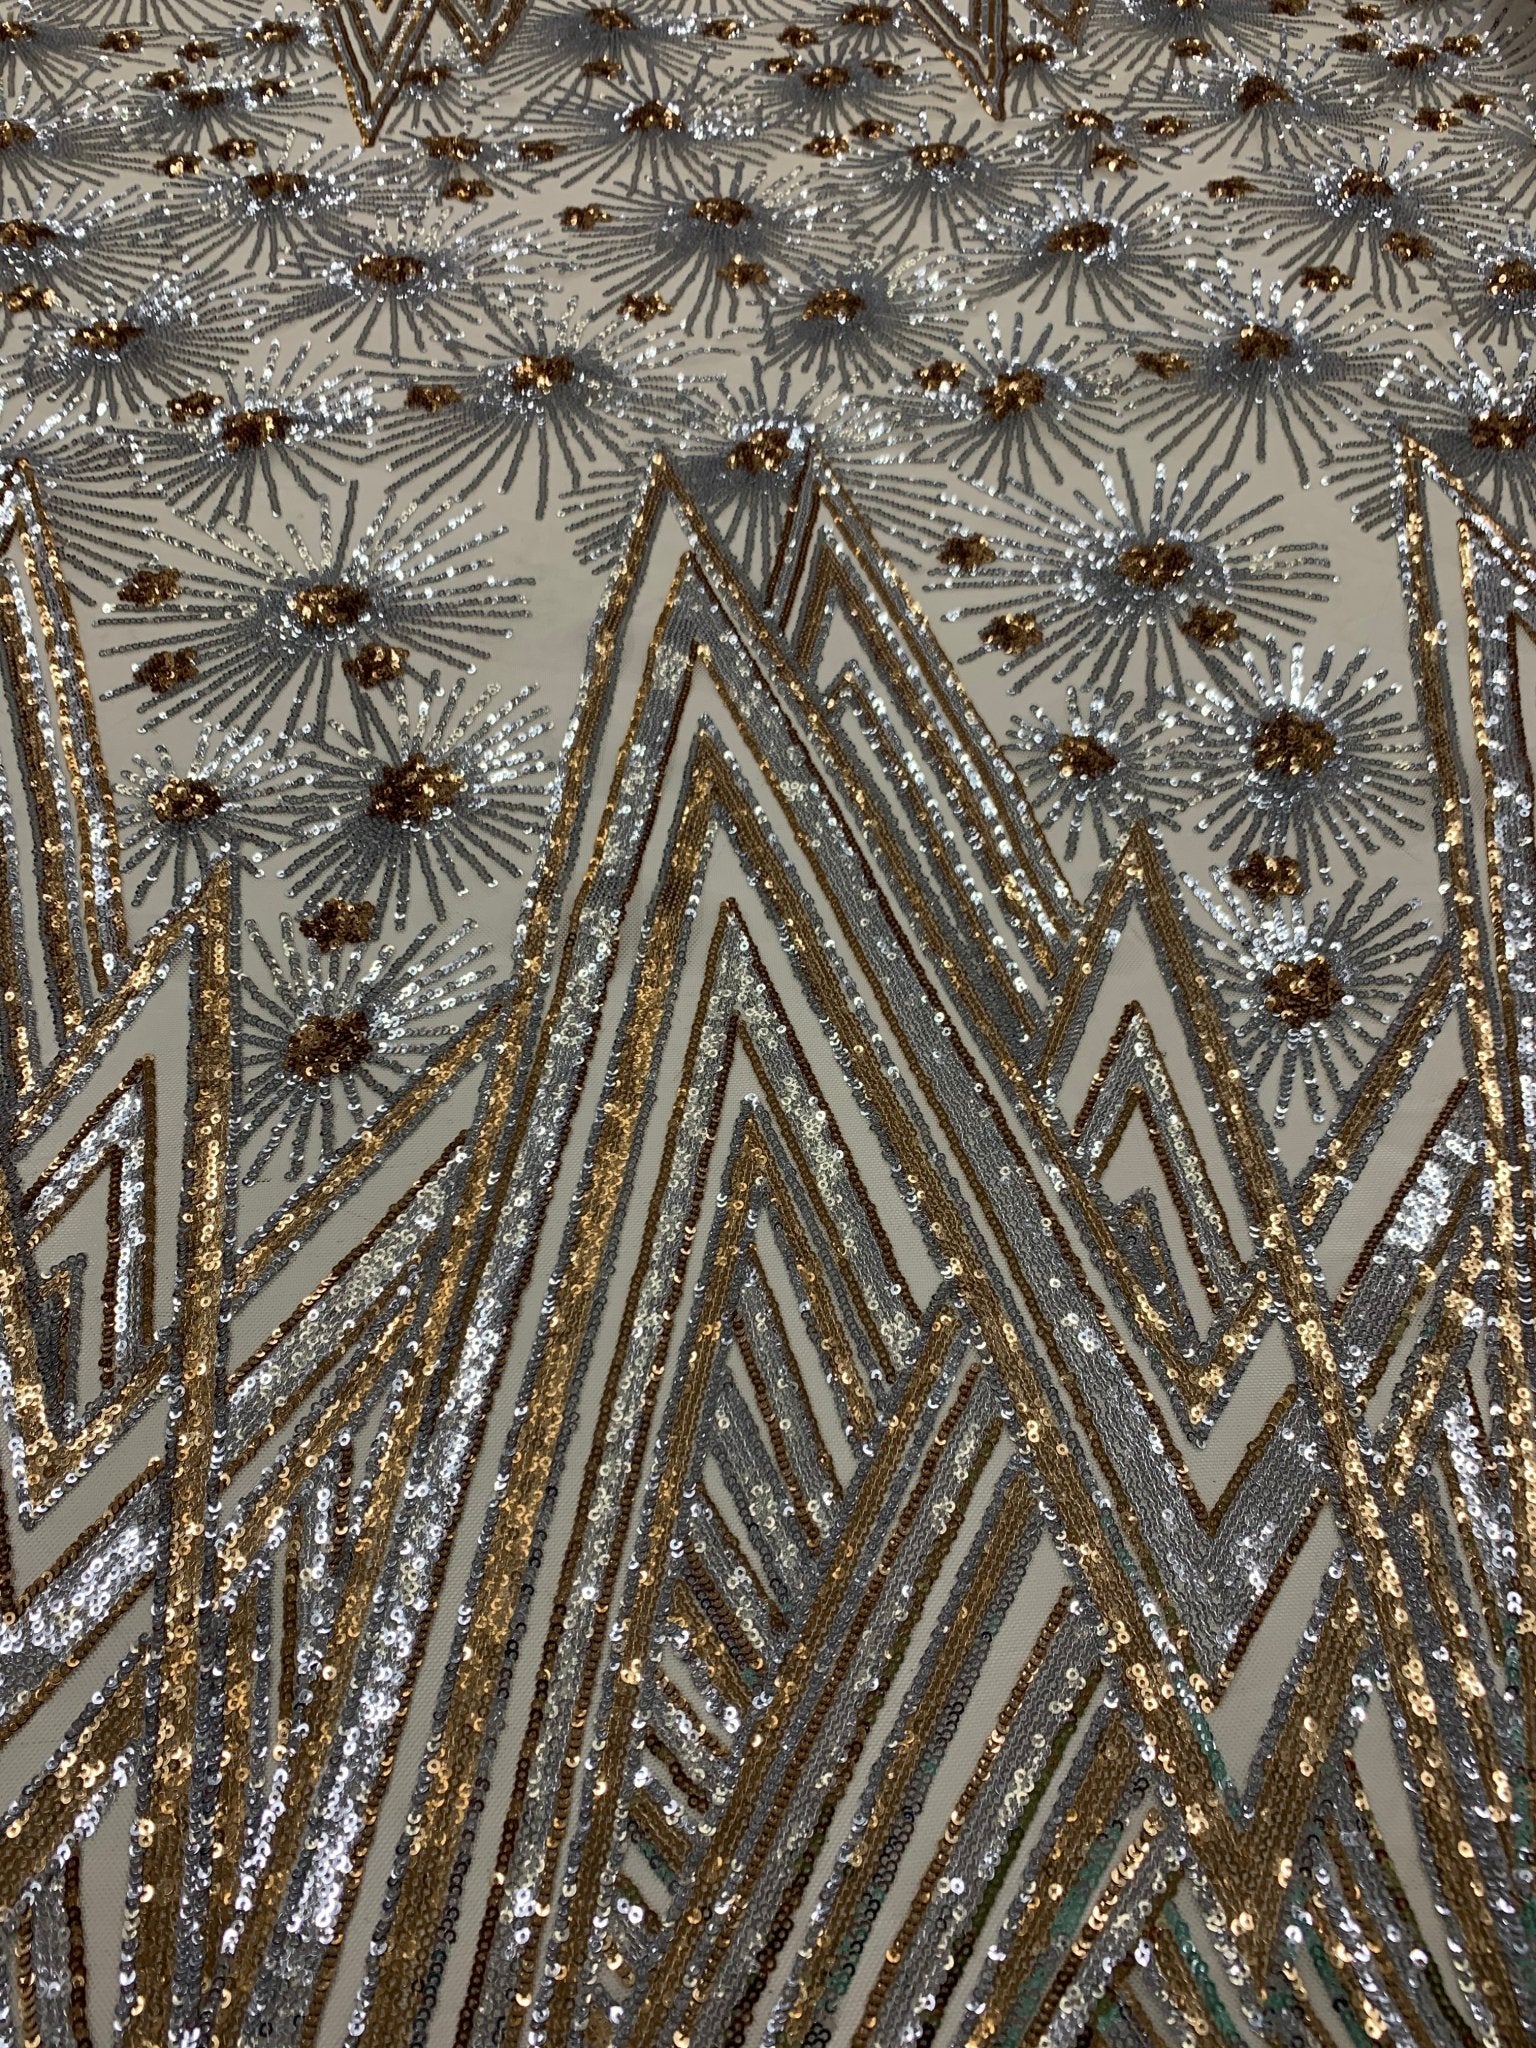 4 Way Stretch Iridescent Geometric Sequin Embroidered Mesh Lace FabricICEFABRICICE FABRICSGold IridescentBy The Yard (58" Wide)4 Way Stretch Iridescent Geometric Sequin Embroidered Mesh Lace Fabric ICEFABRIC |Gold Iridescent